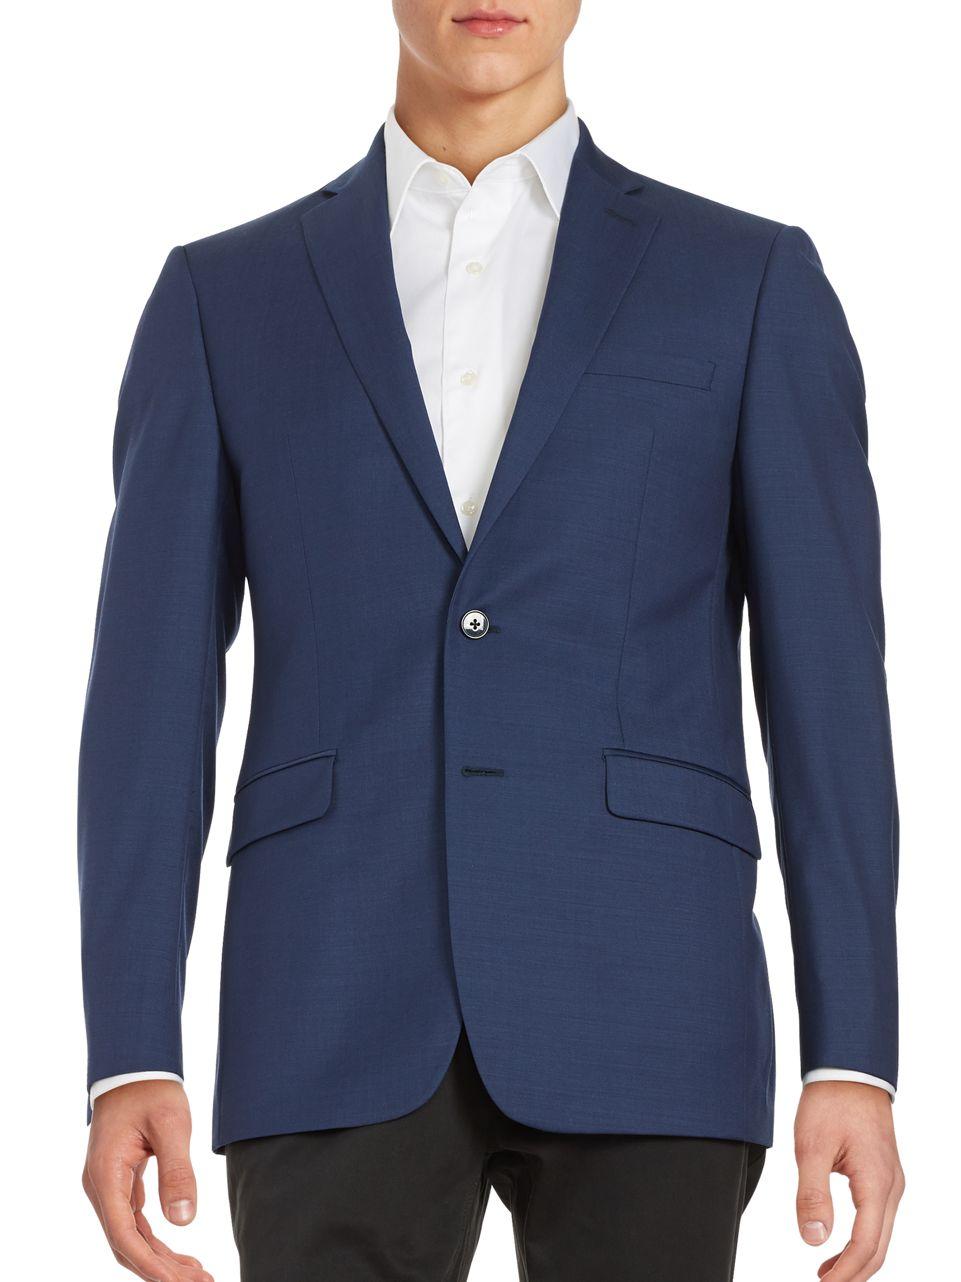 Lyst - Calvin Klein Two-button Wool Jacket in Blue for Men